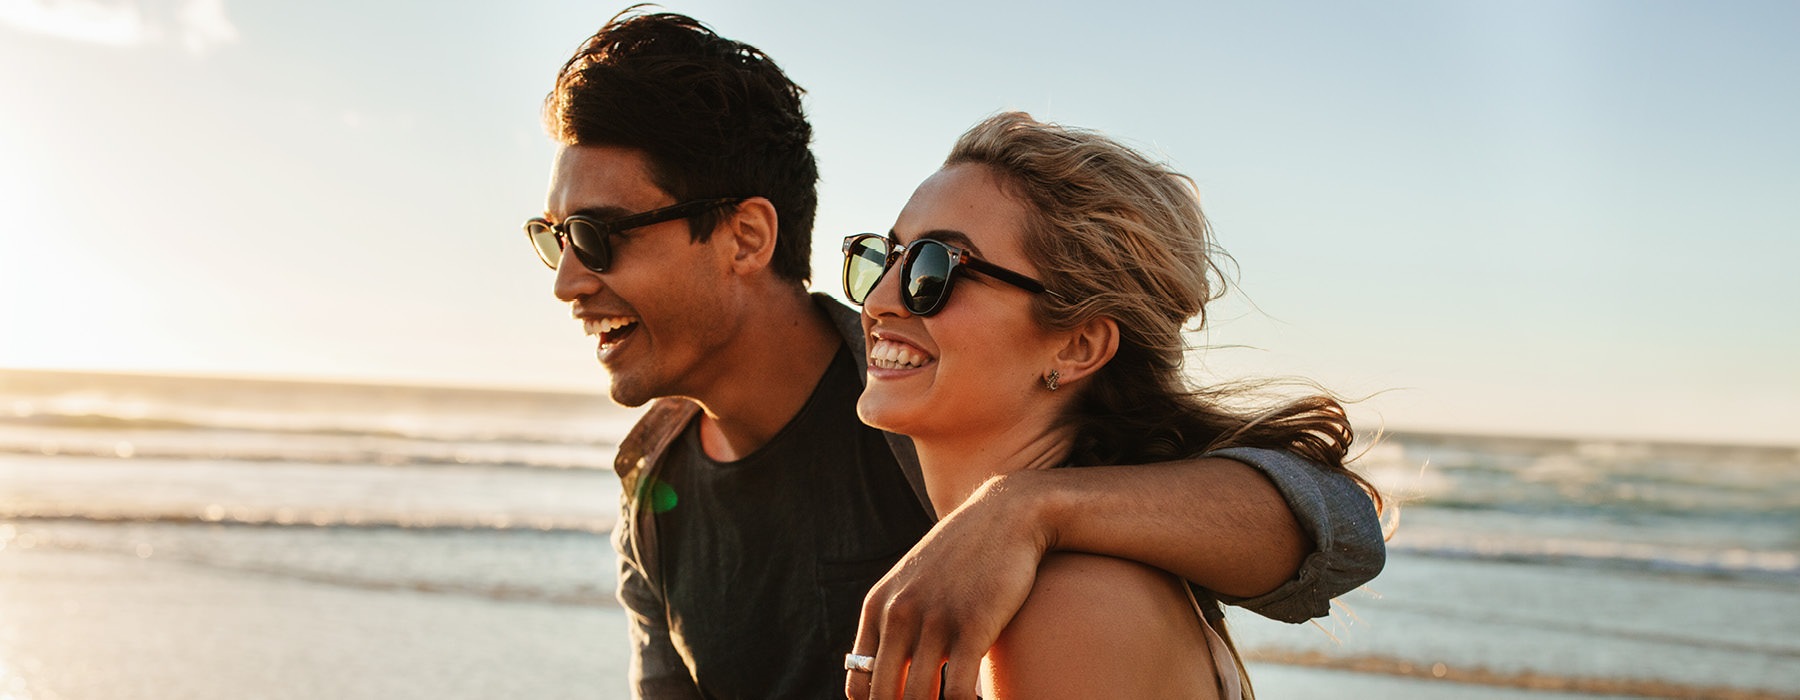 a young couple wearing sunglasses, walk along a beach